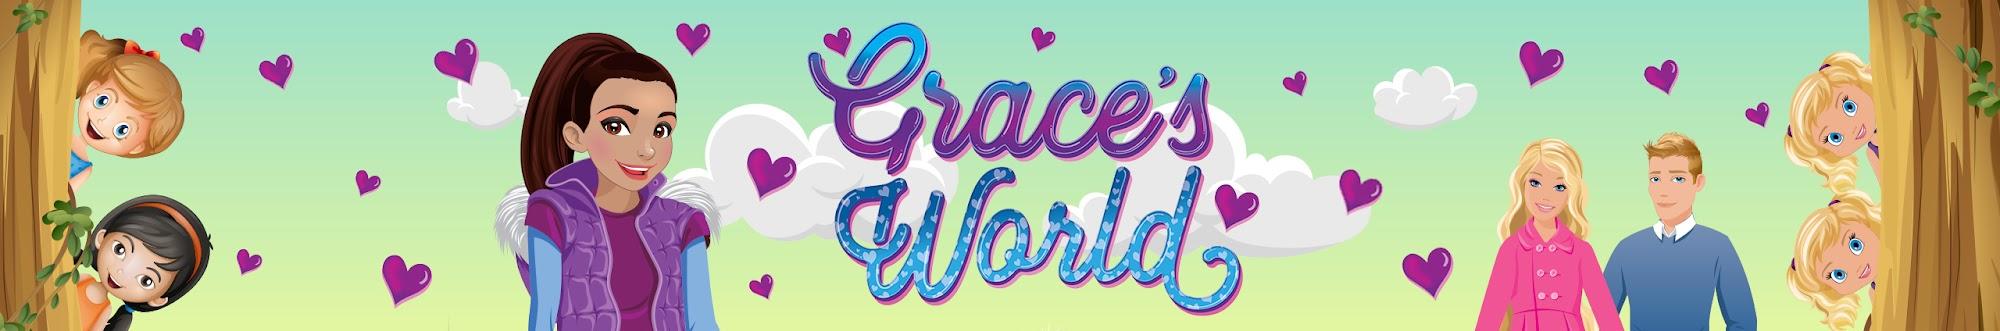 Grace's World